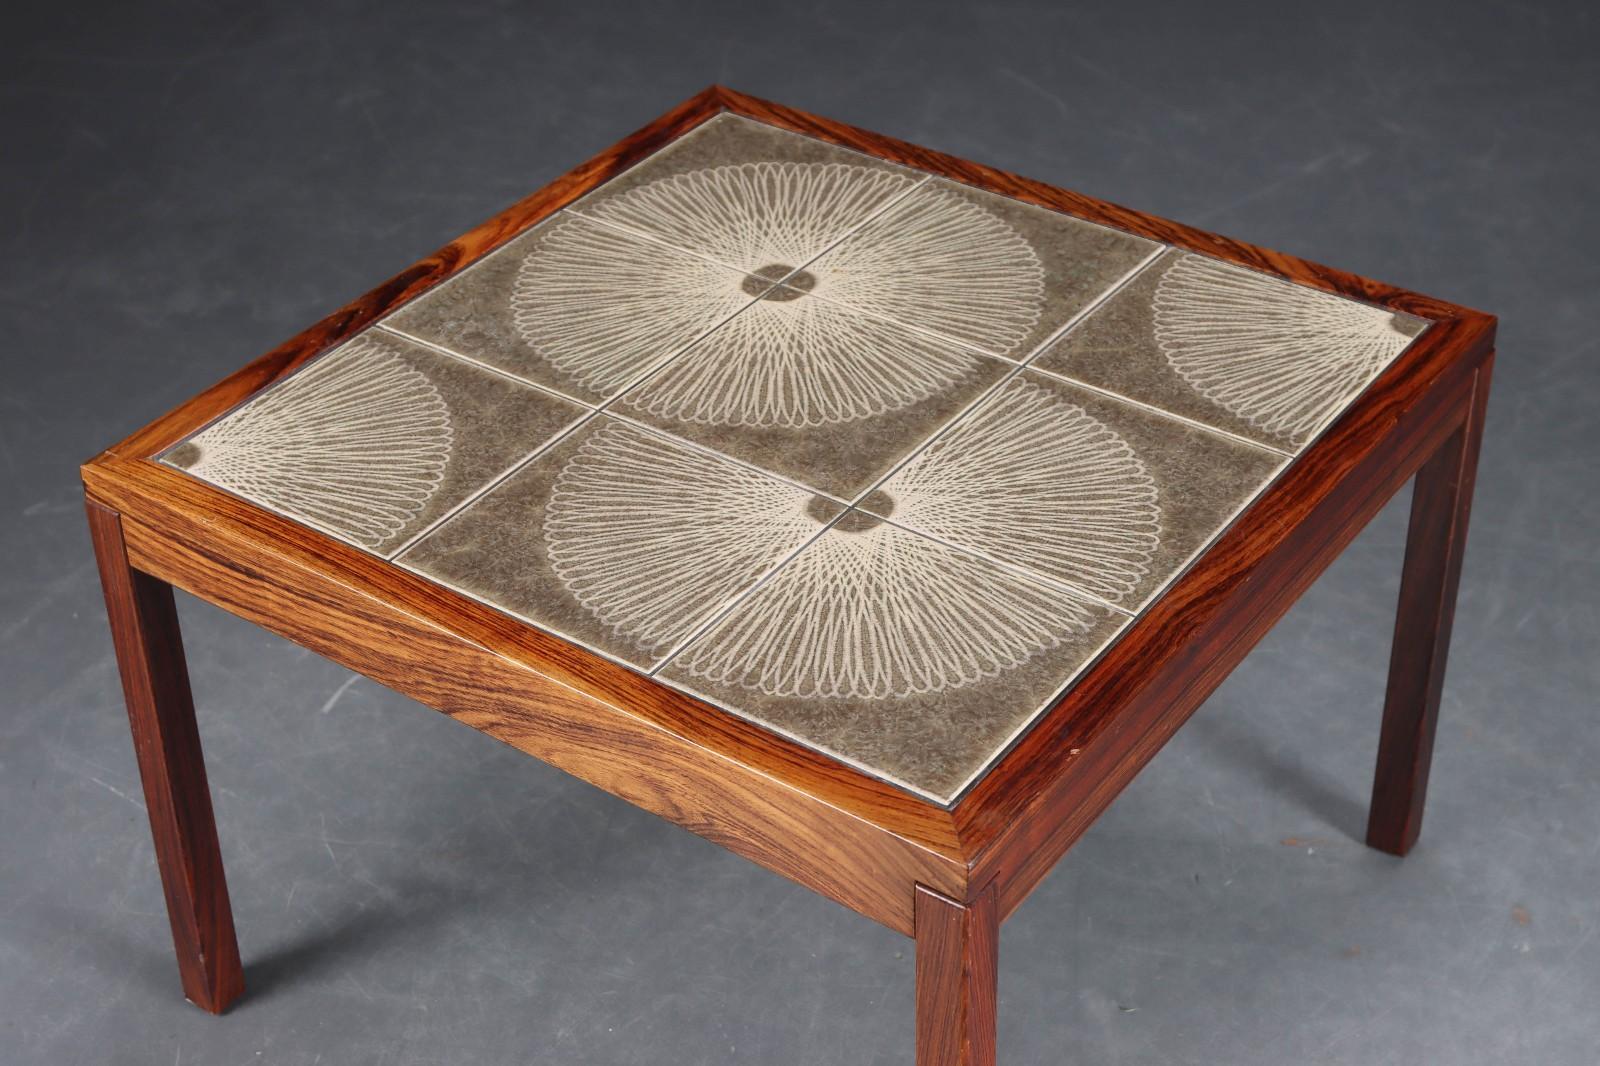 Danish palisander coffee table with ceramic tile top, circa 1960s.